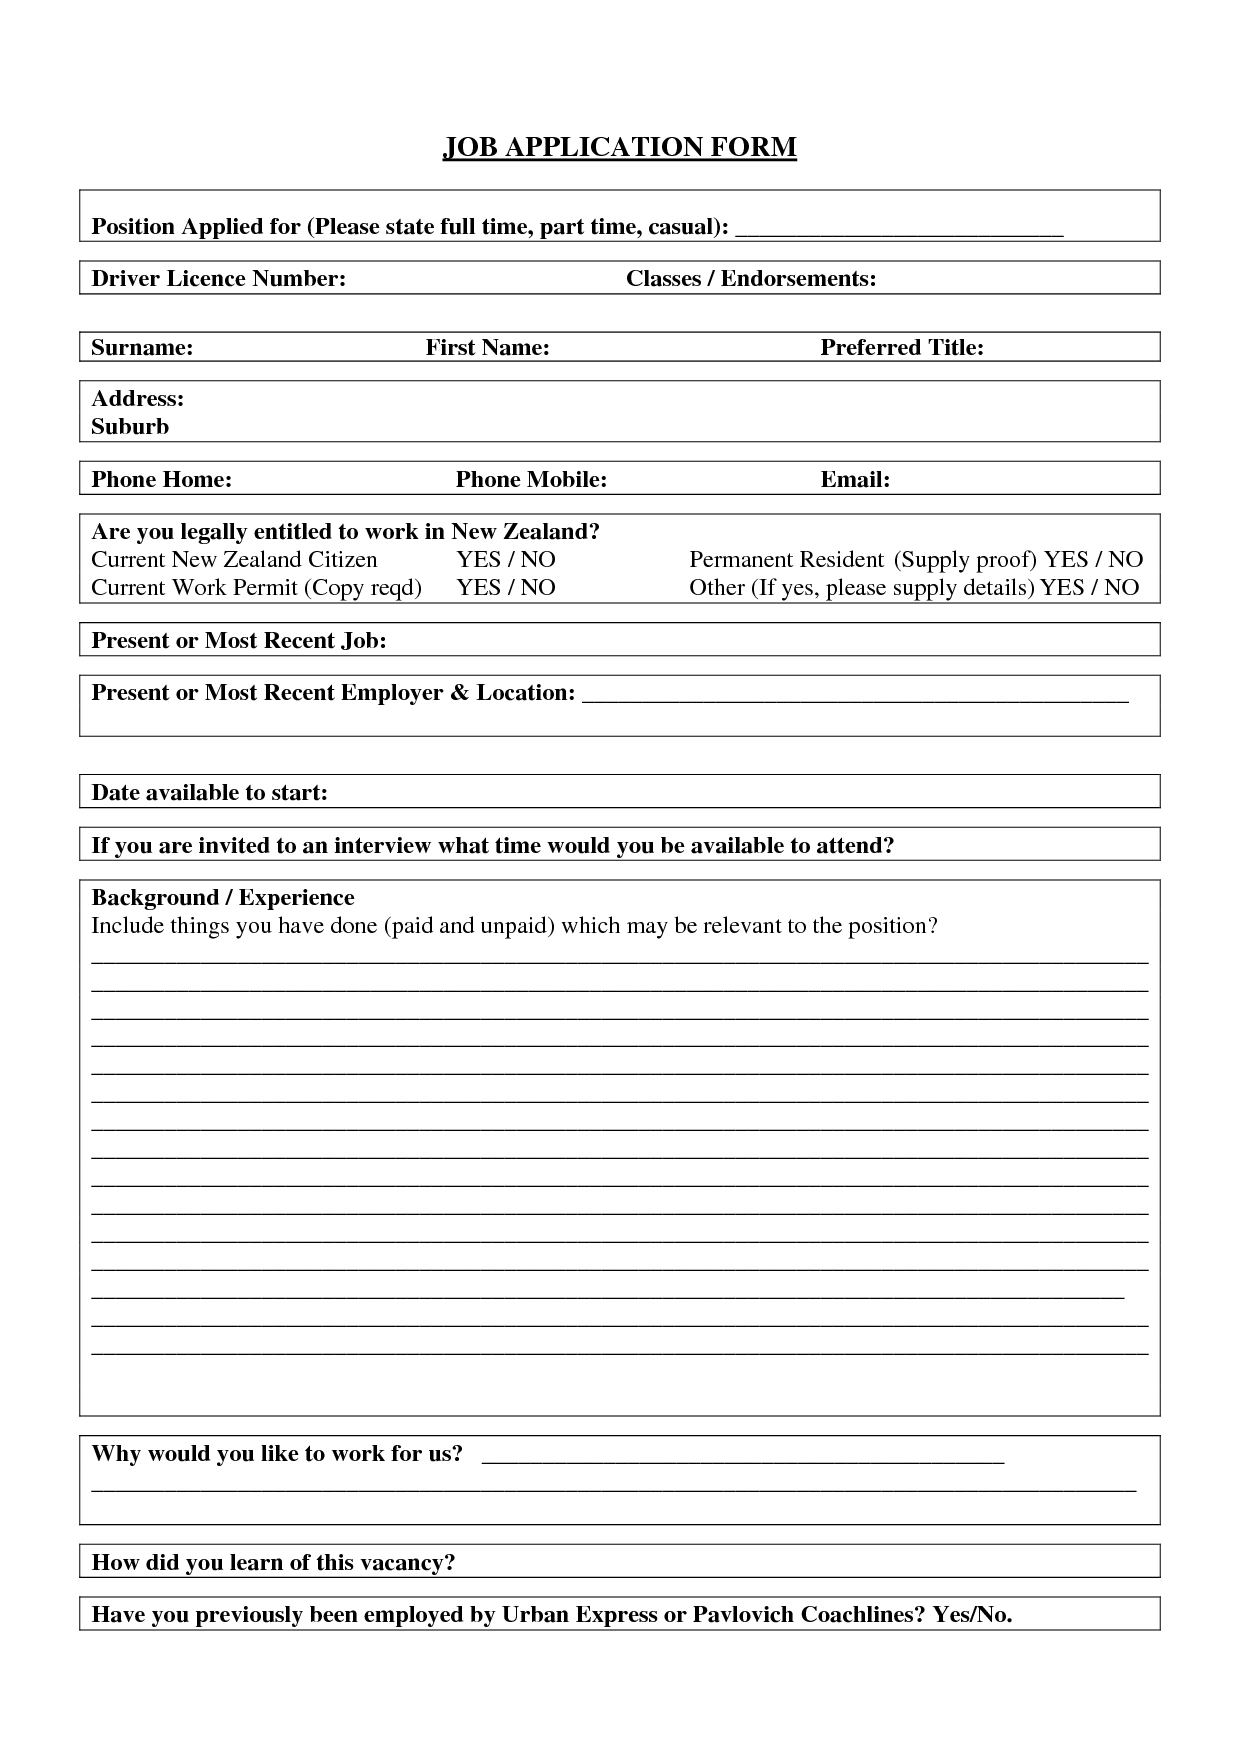 Sample Job Interview Form Image